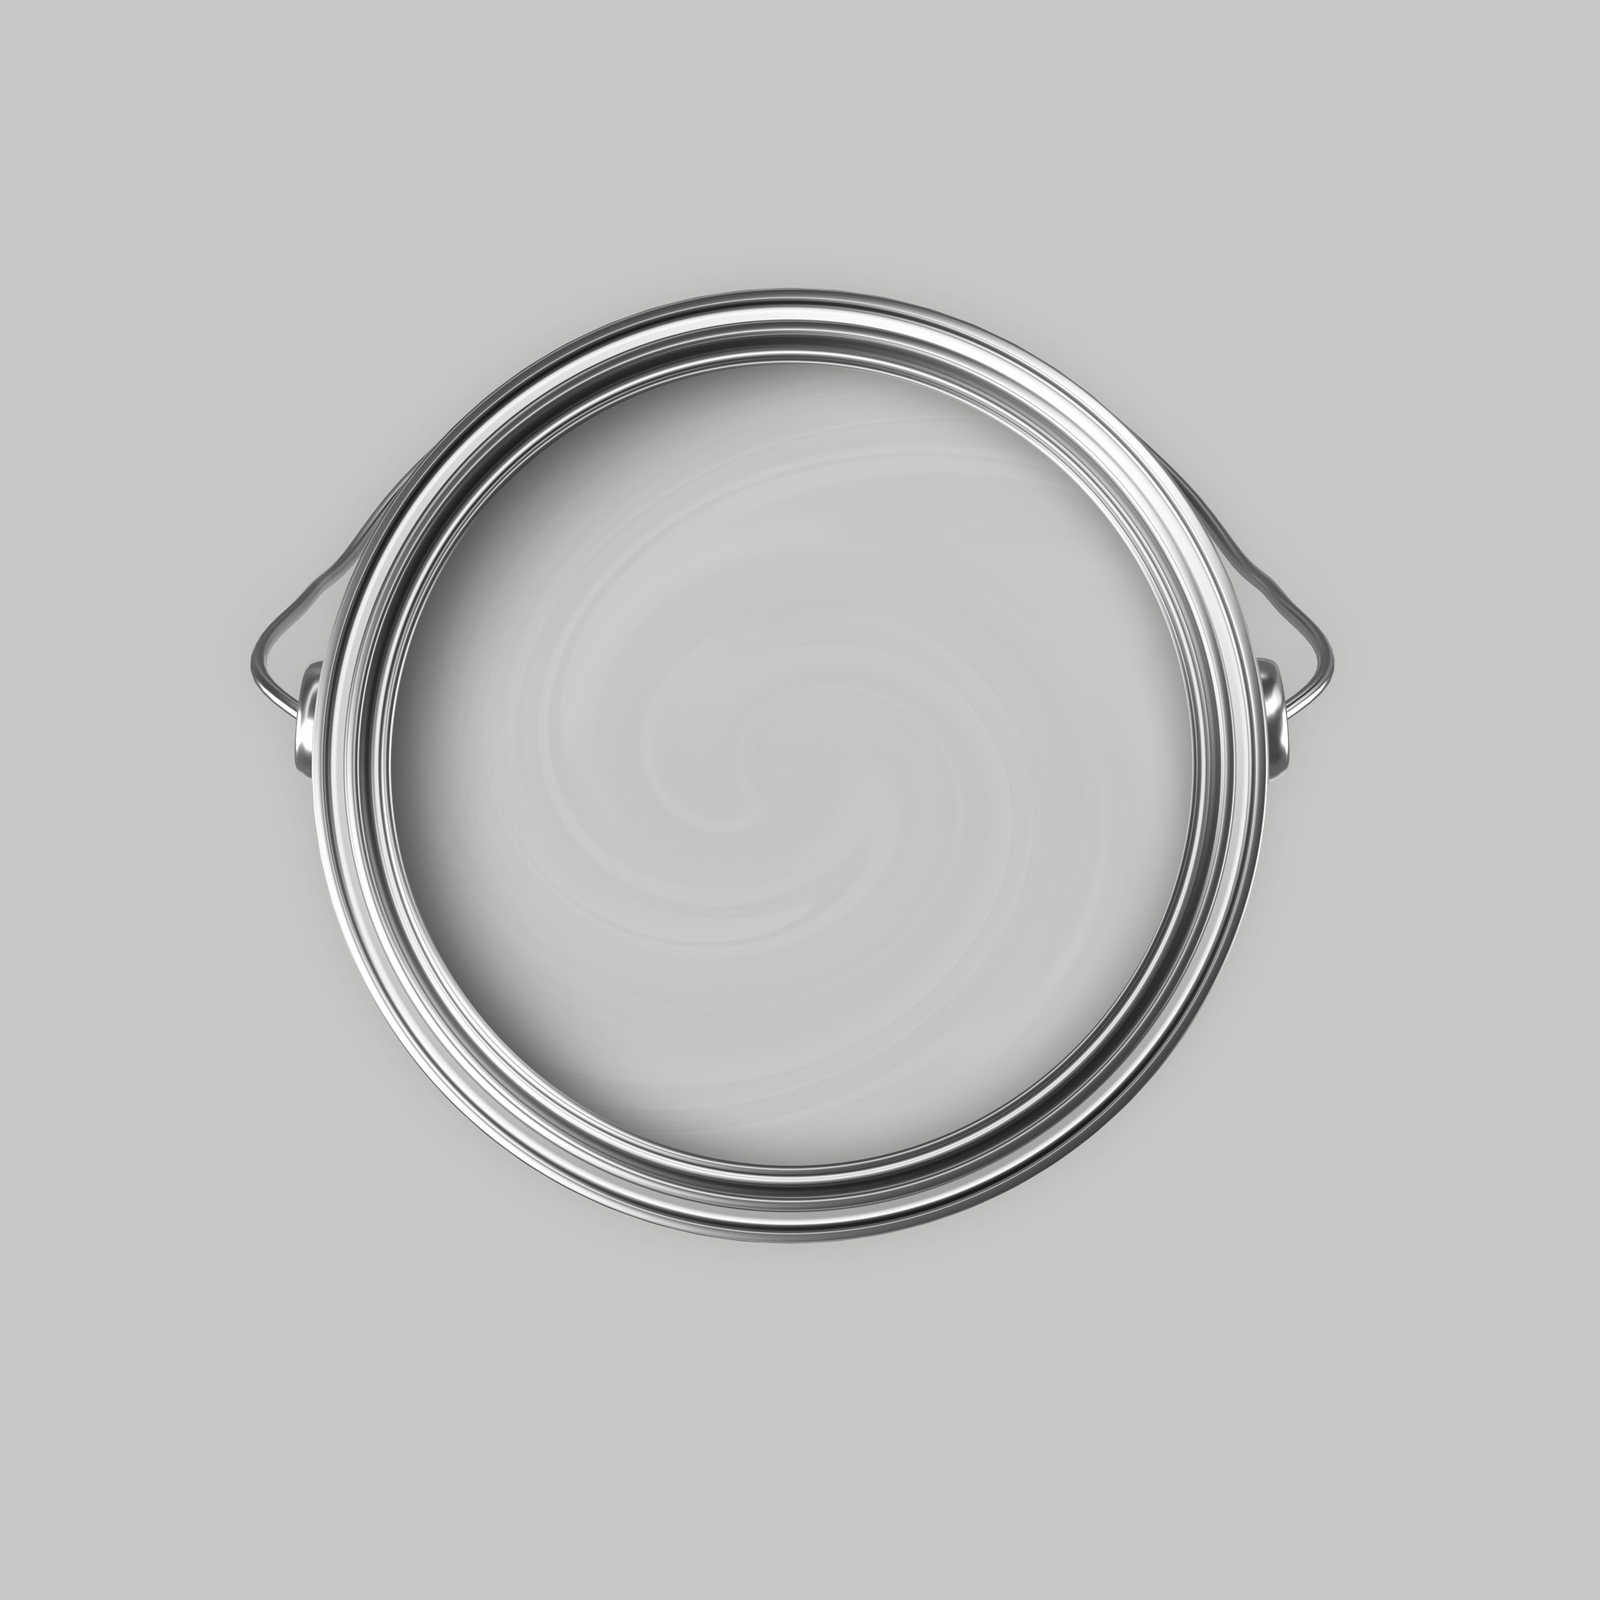             Premium Wall Paint plain light grey »Industrial Grey« NW100 – 5 litre
        